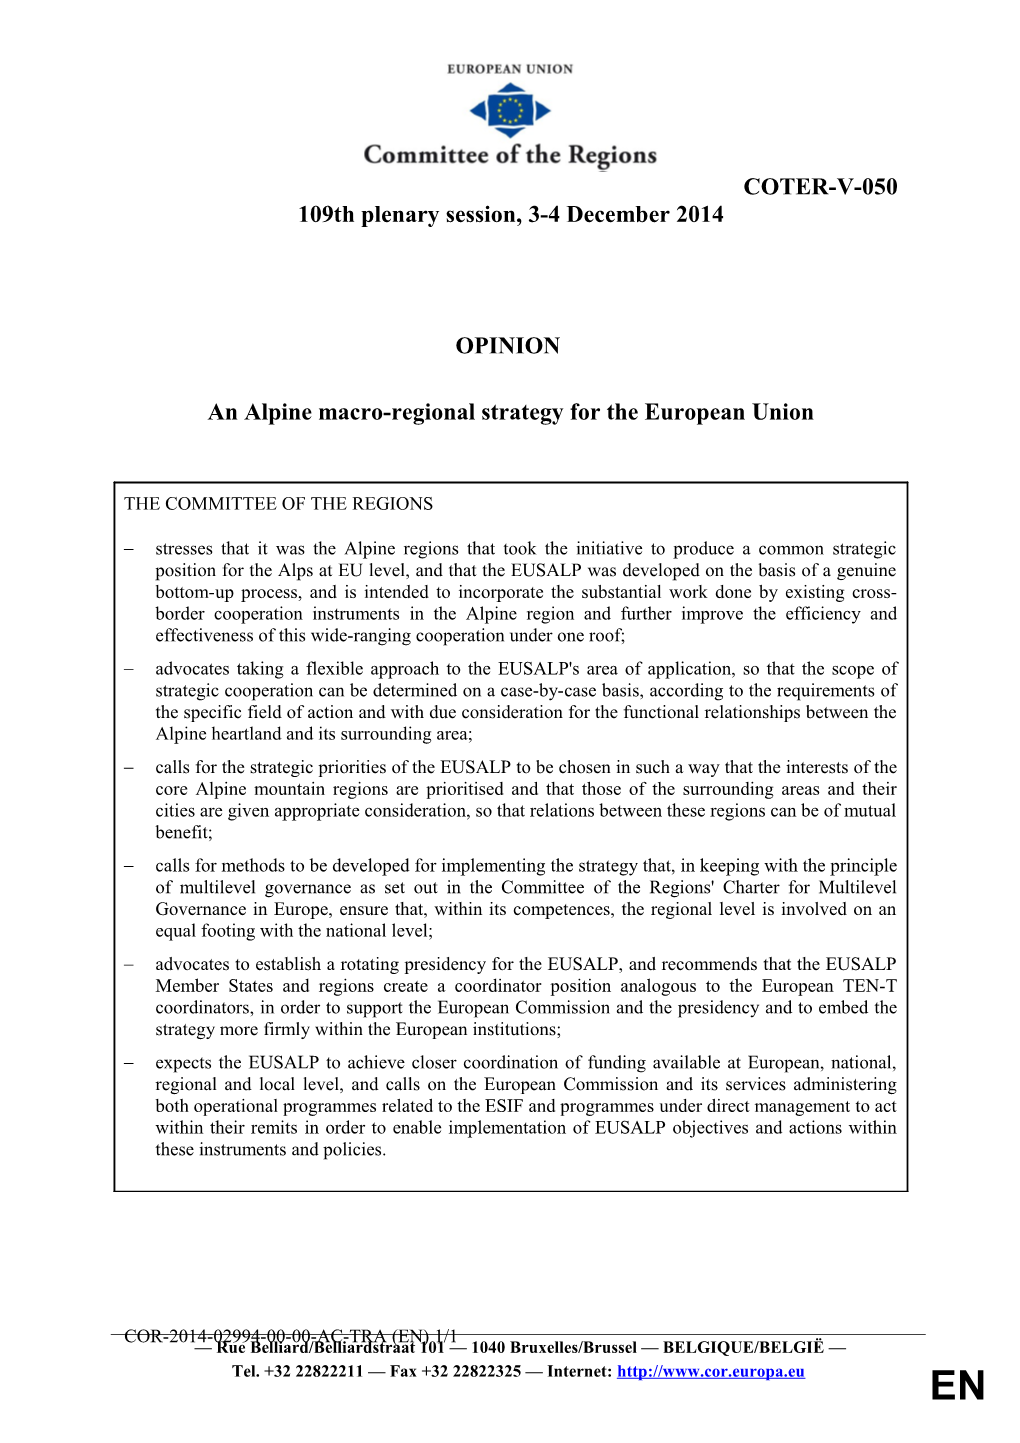 An Alpine Macro-Regional Strategy for the European Union